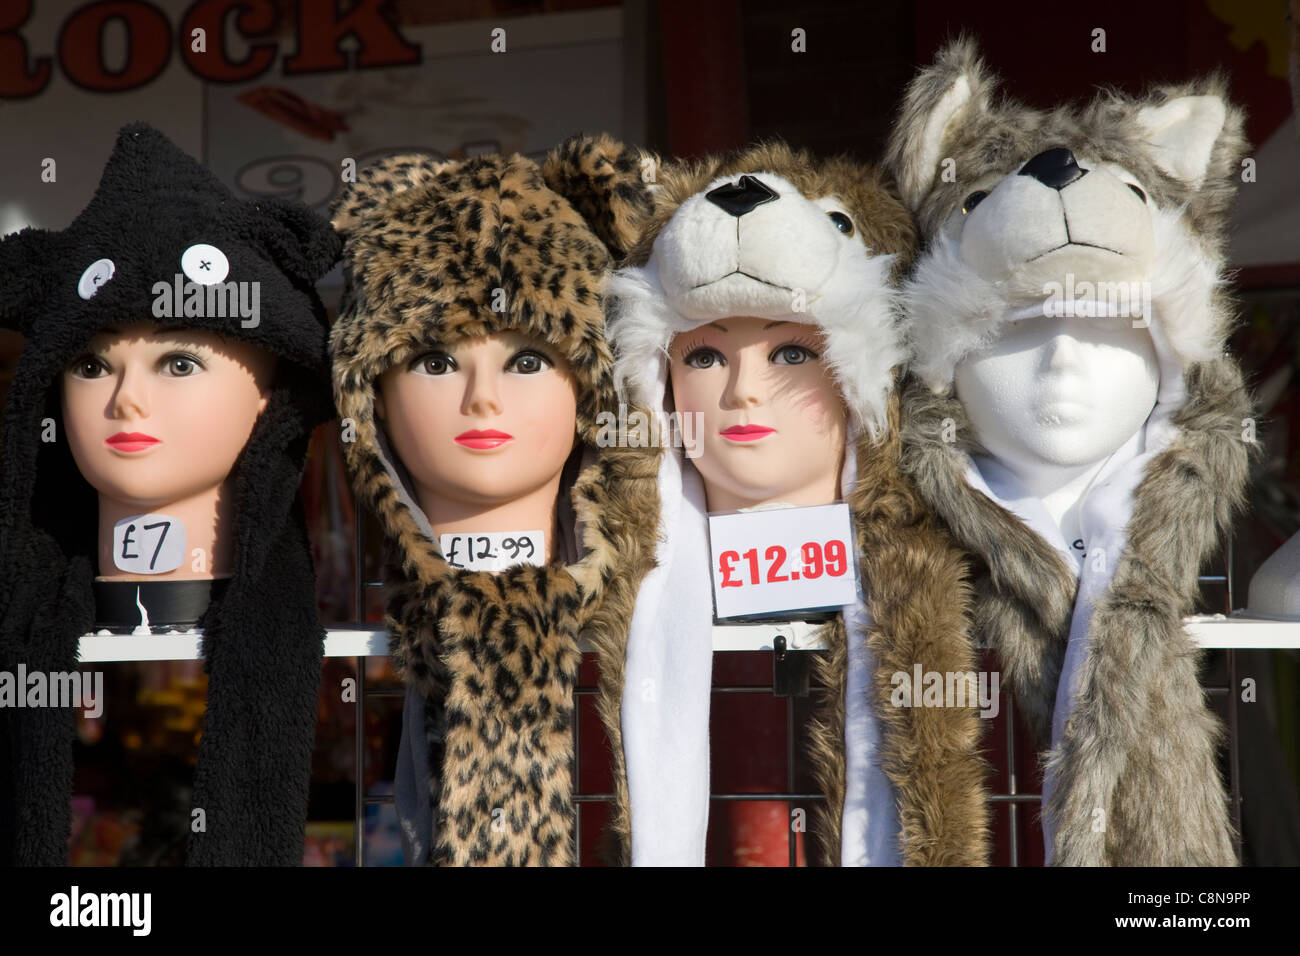 Dummy heads modelling warm fur hats hanging on a market stall, Blackpool, UK Stock Photo